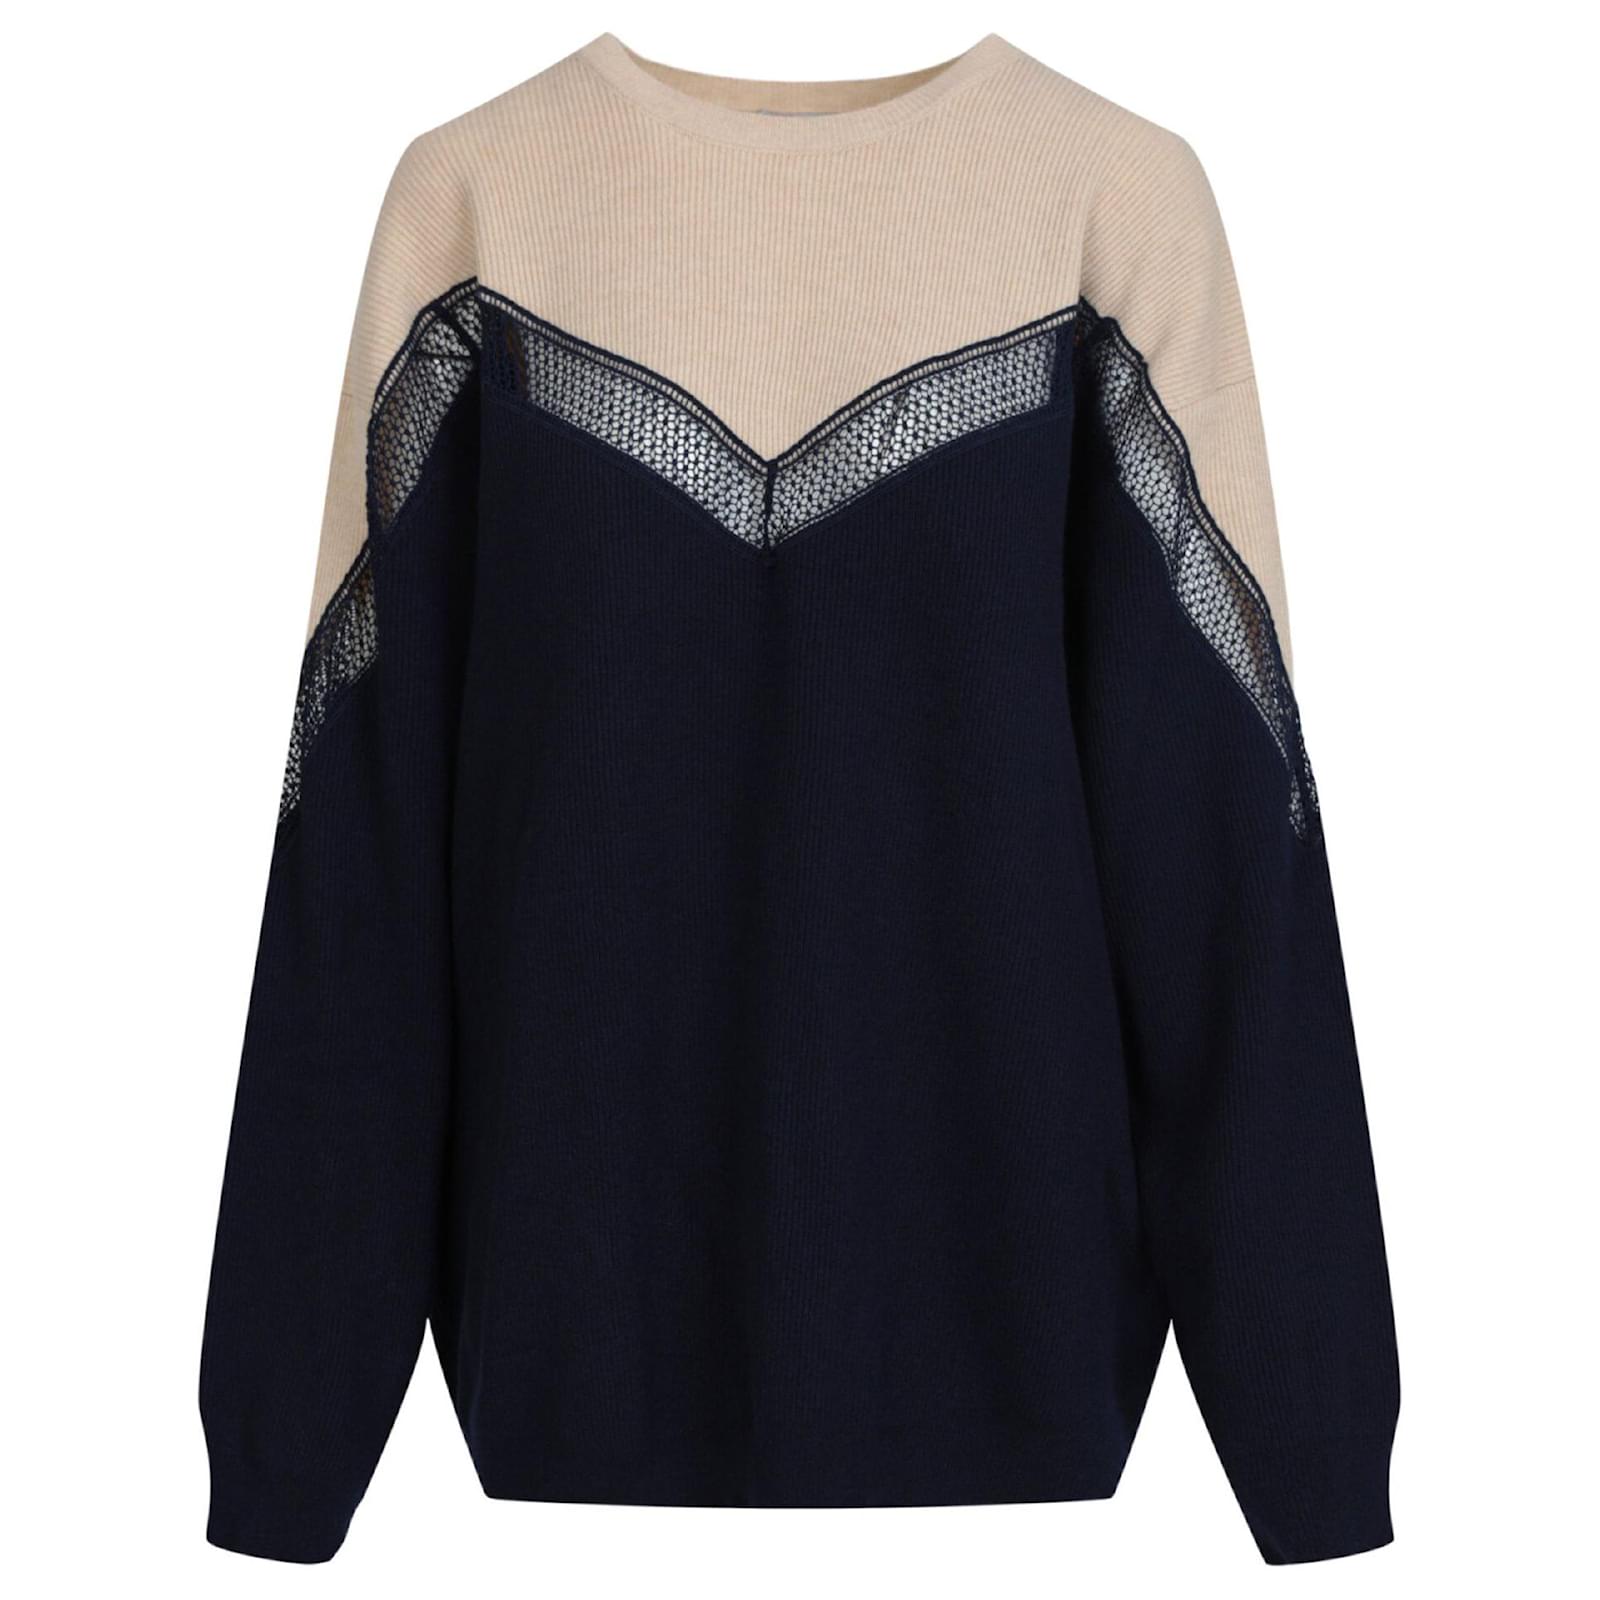 Stella McCartney Two-Toned Chevron Knitted Sweater